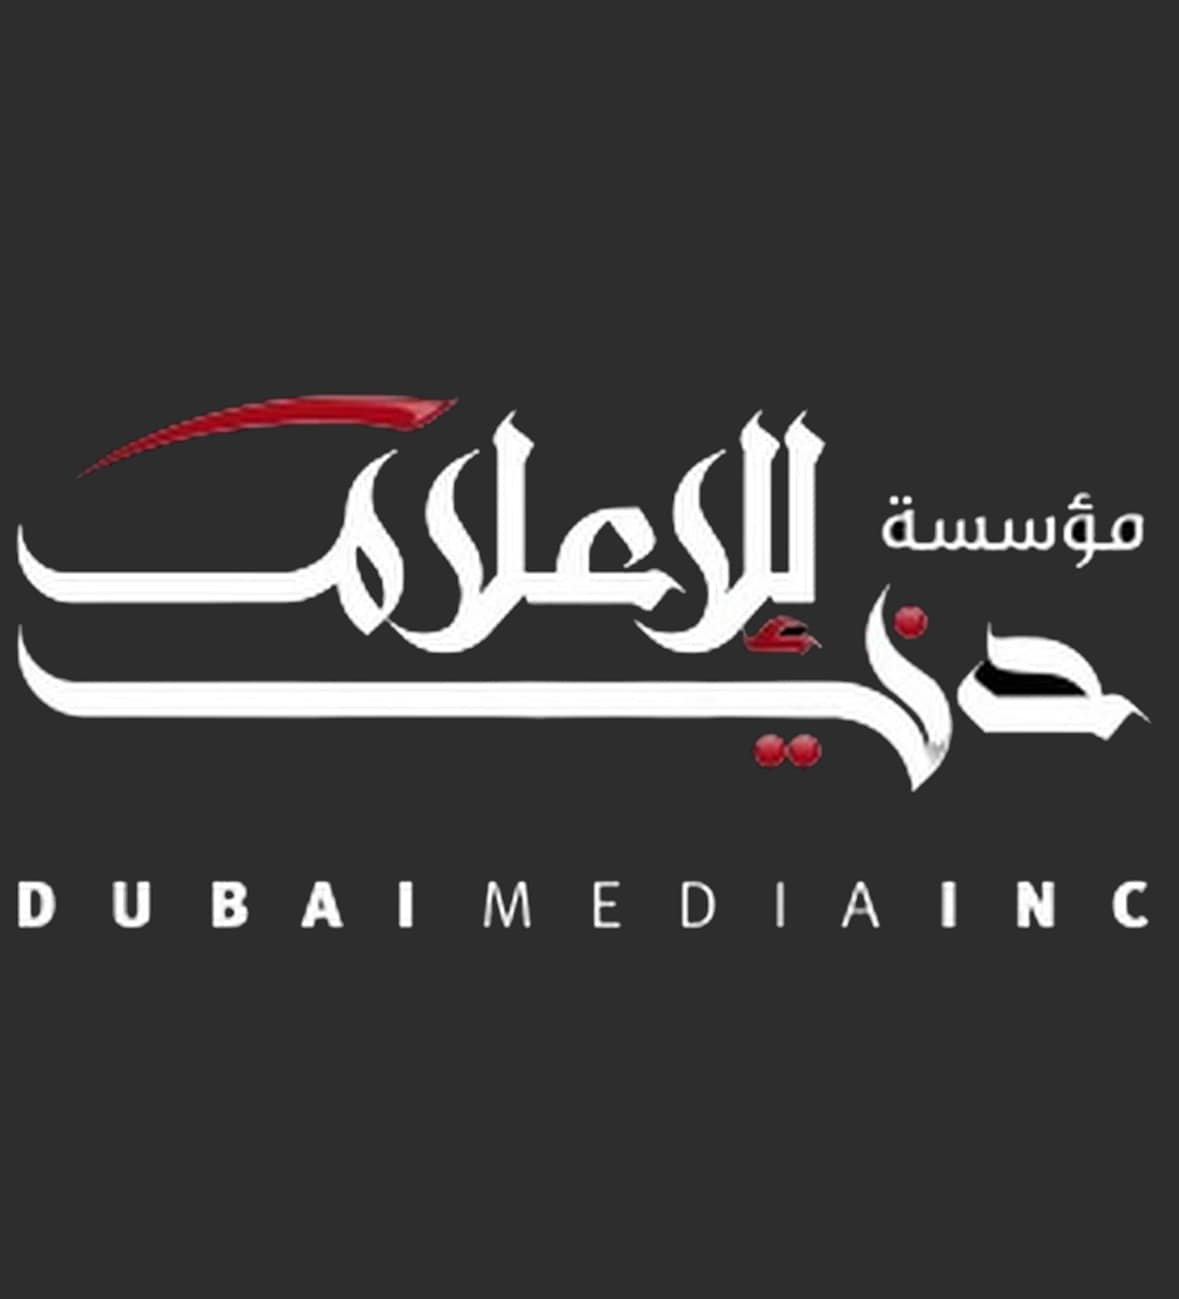 Dubai Media Corporation